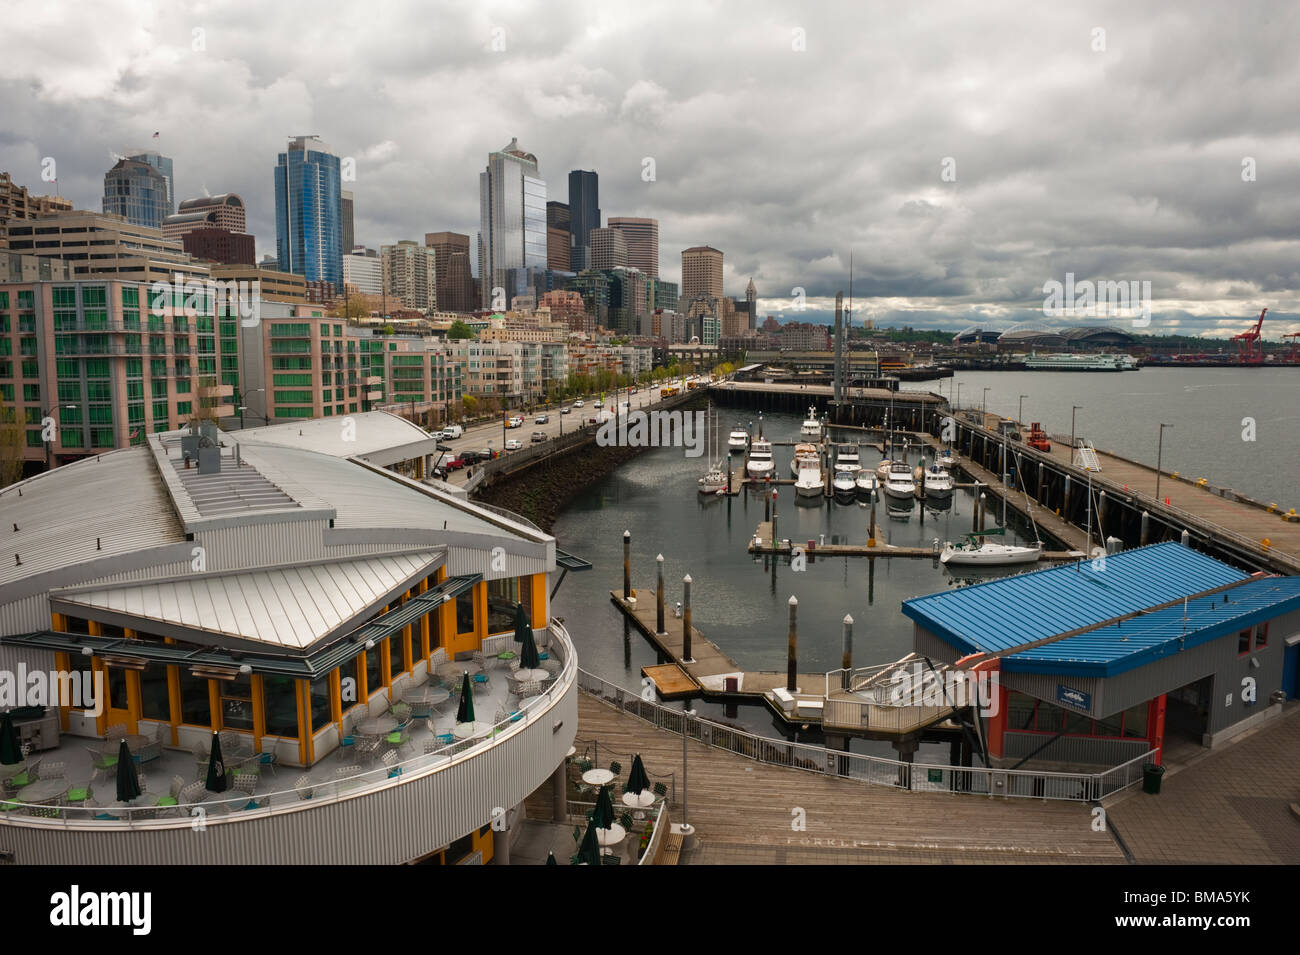 The dramatic Seattle, Washington skyline as seen from pier 66 on the Elliott Bay waterfront. Marinas, restaurants on waterfront. Stock Photo